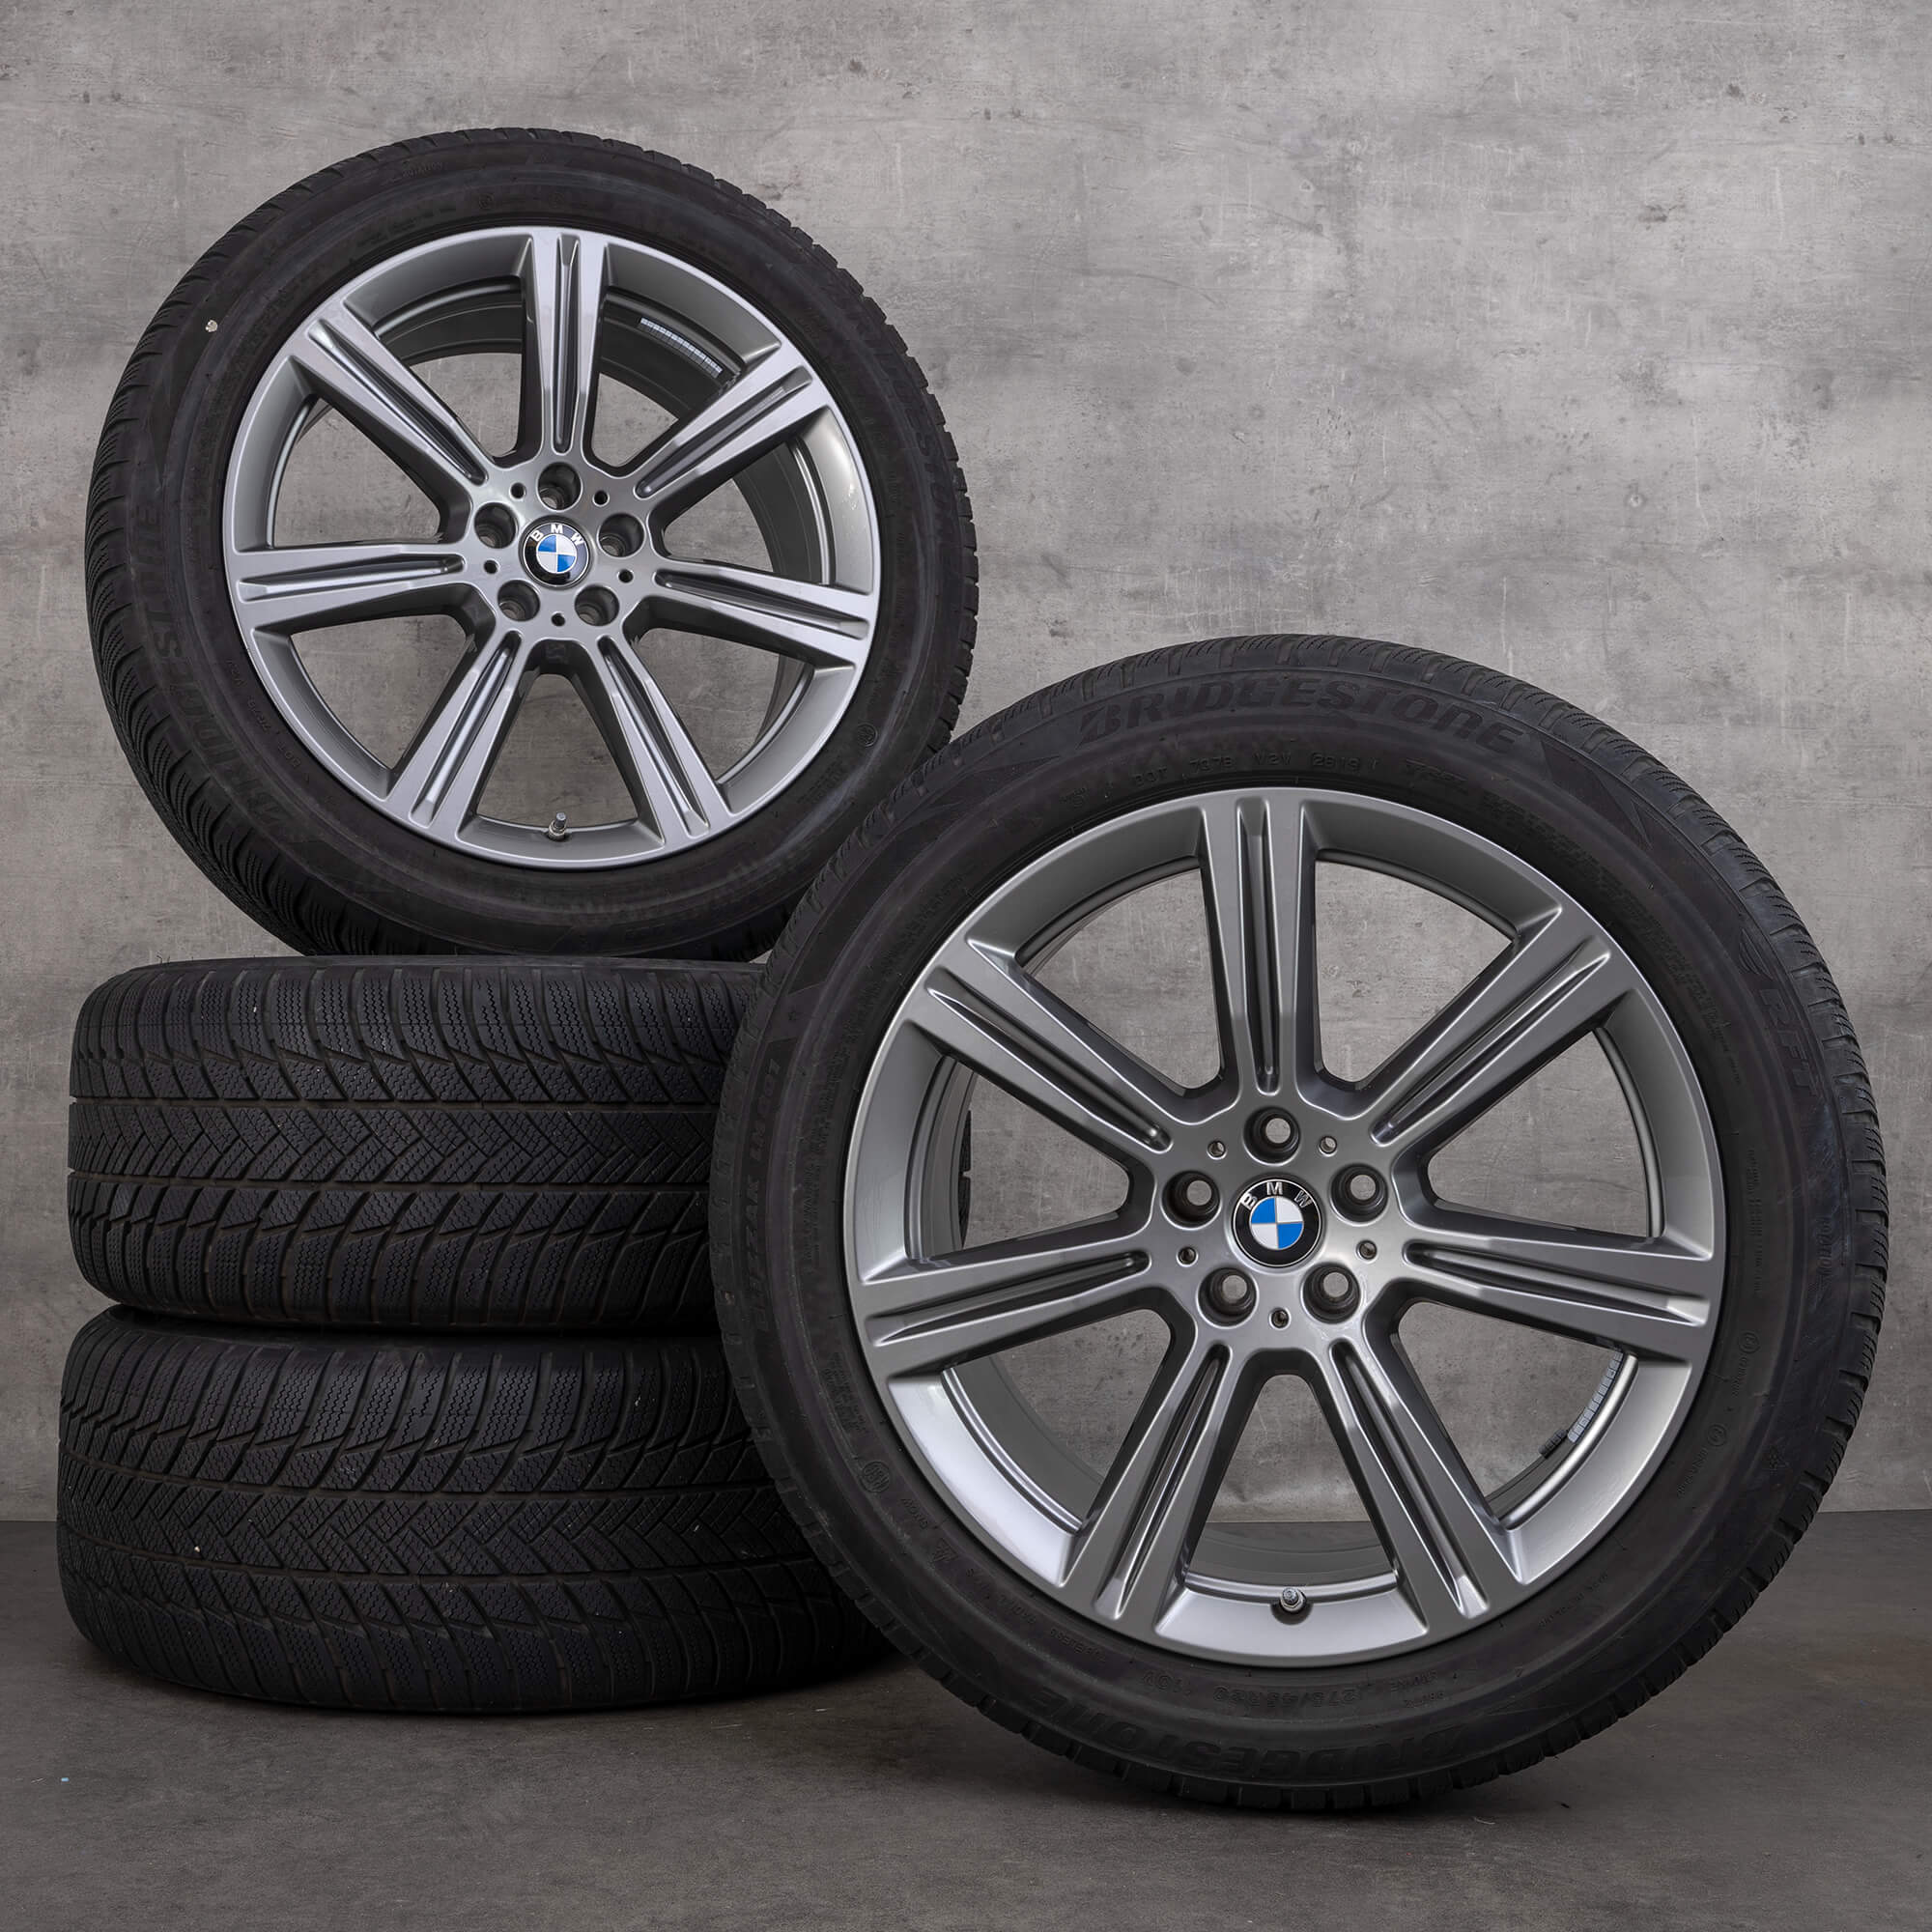 Llantas BMW 20 pulgadas X5 G05 X6 G06 estilo 736 neumáticos de invierno ruedas